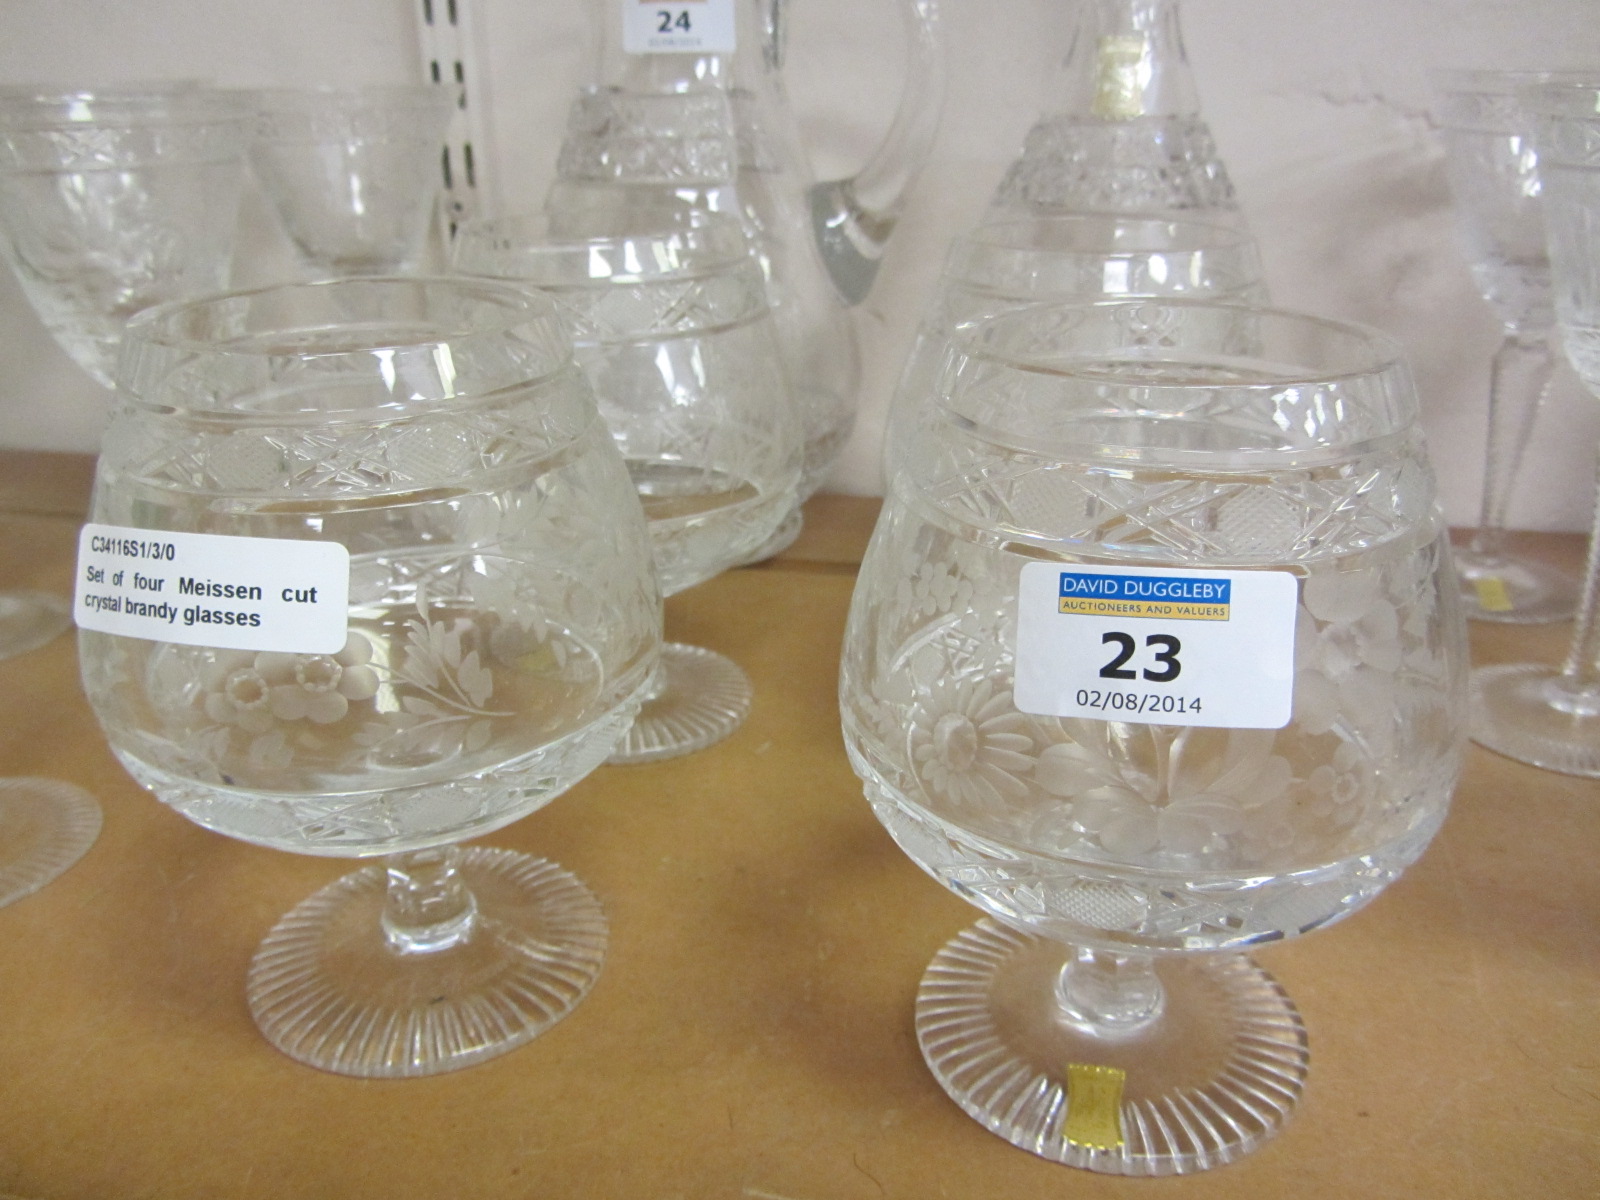 Set of four Meissen cut crystal brandy glasses